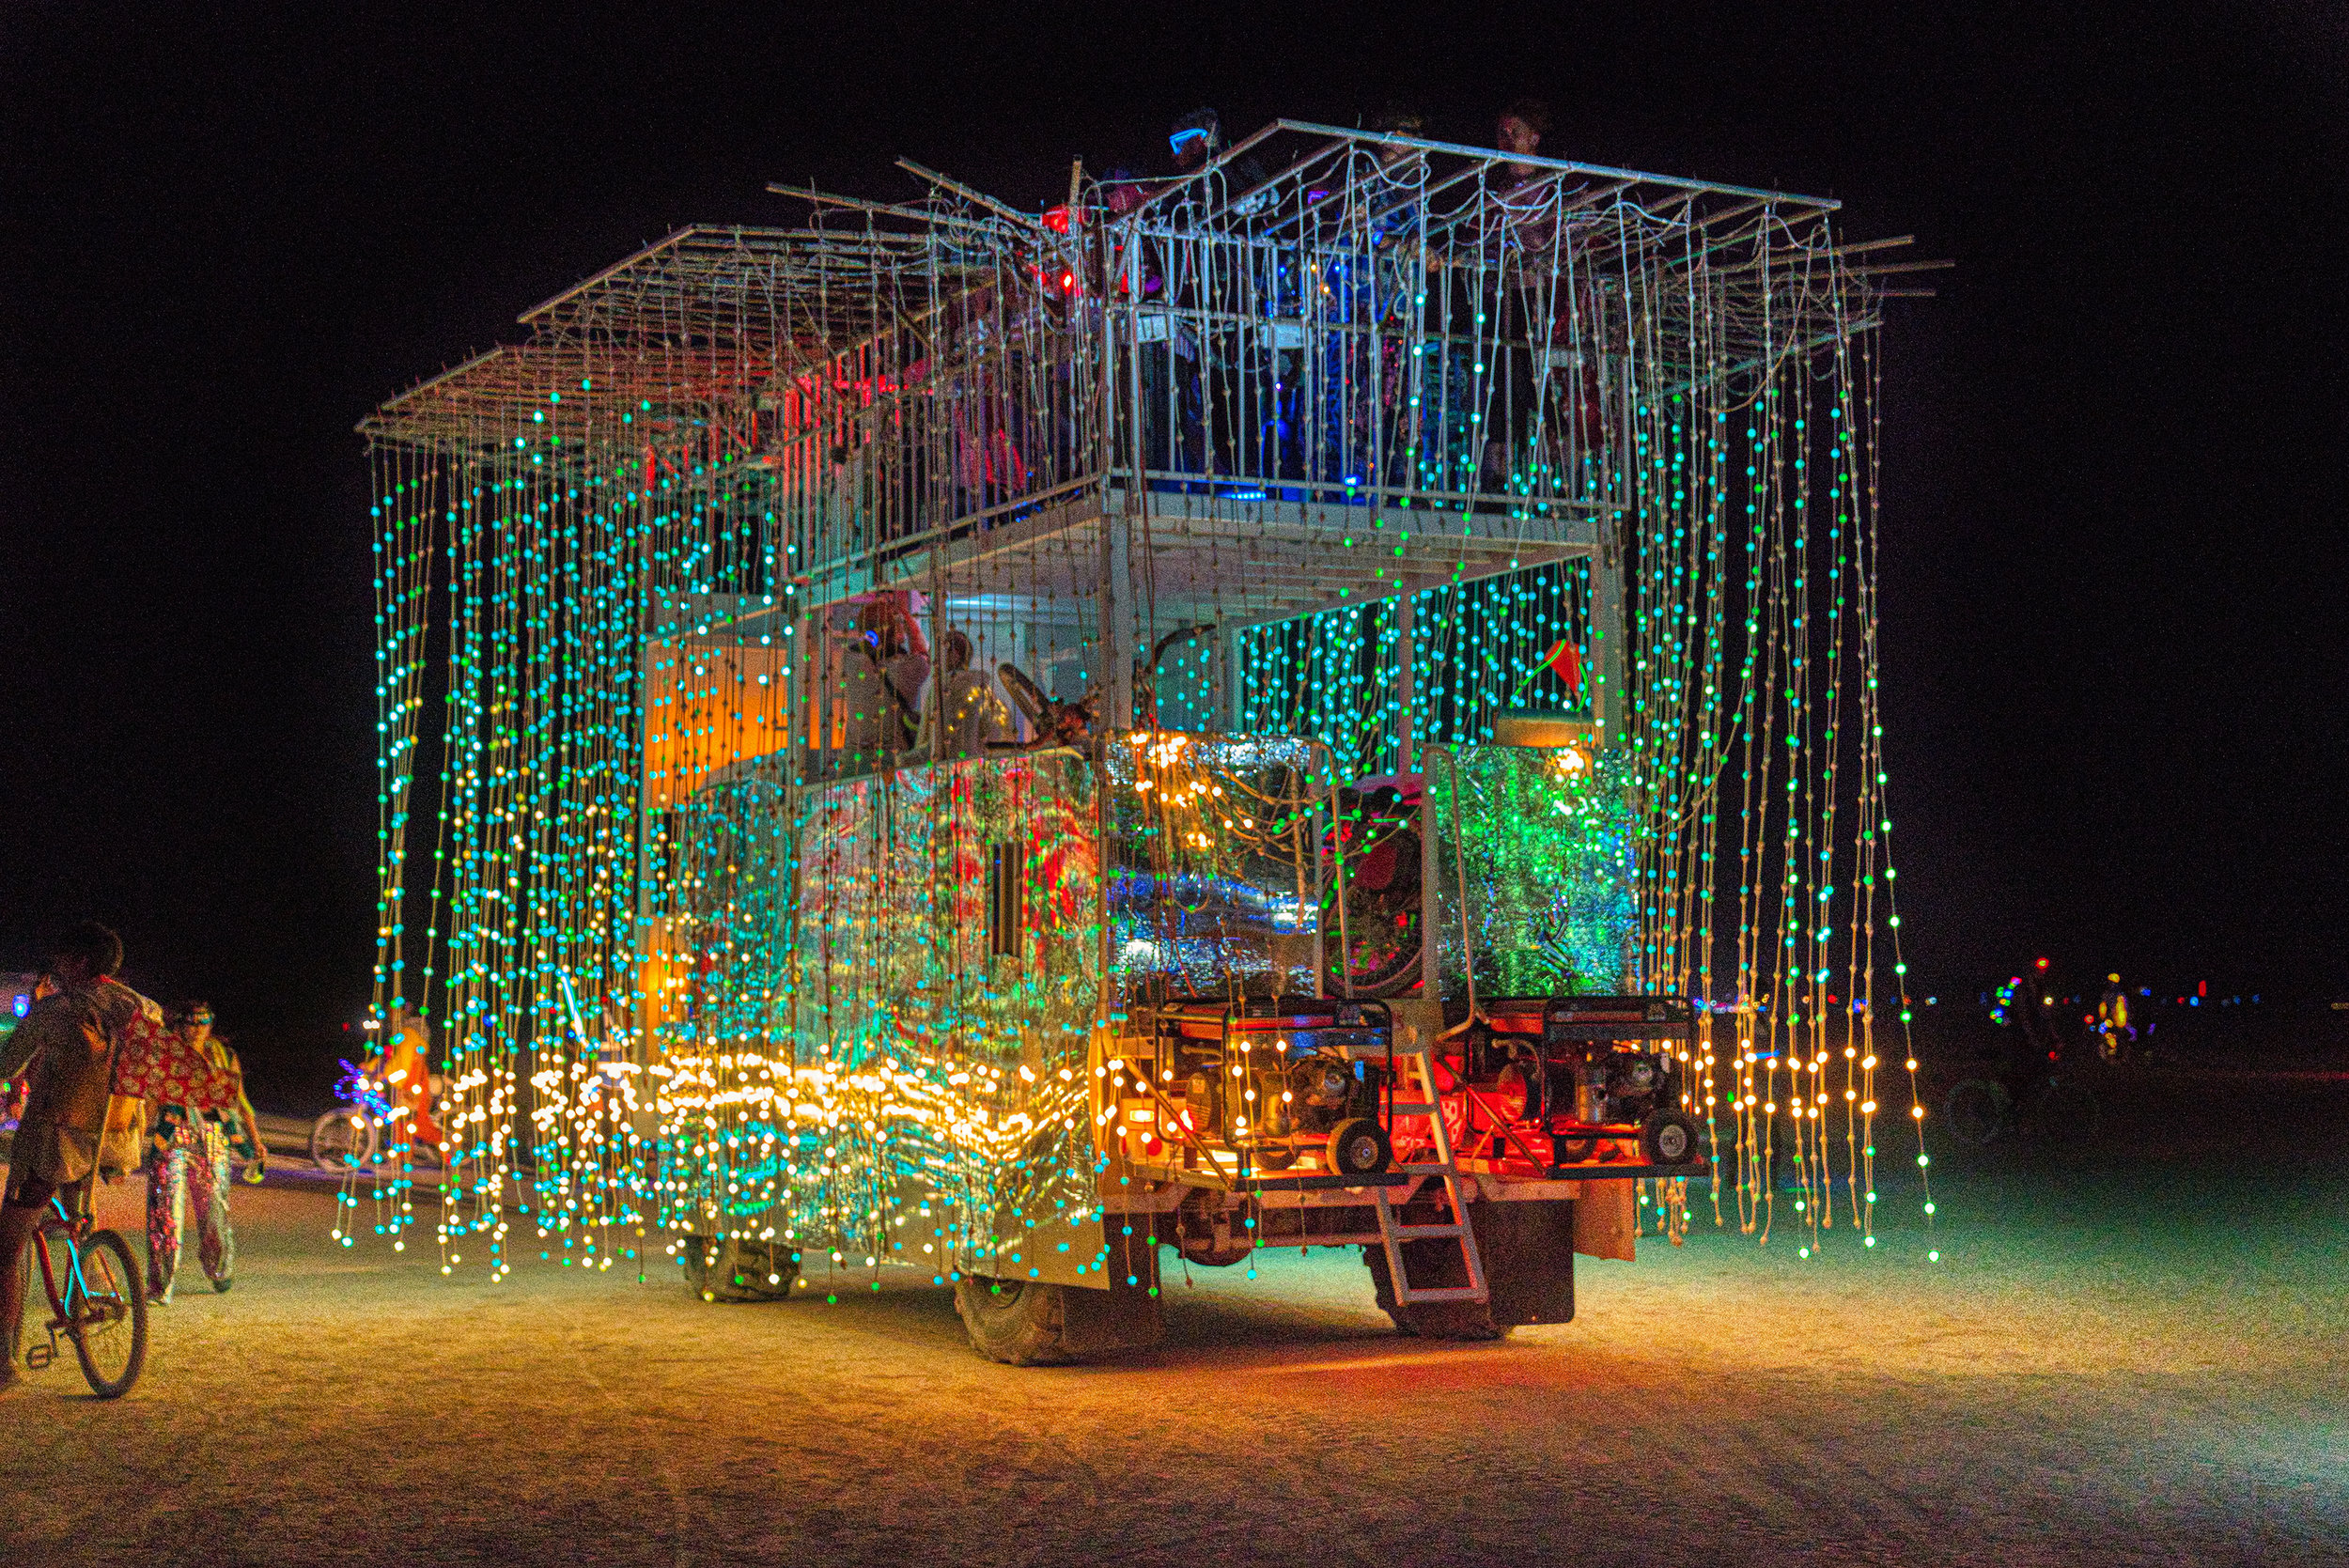 Burning Man 2019 - The Polaris Art Car